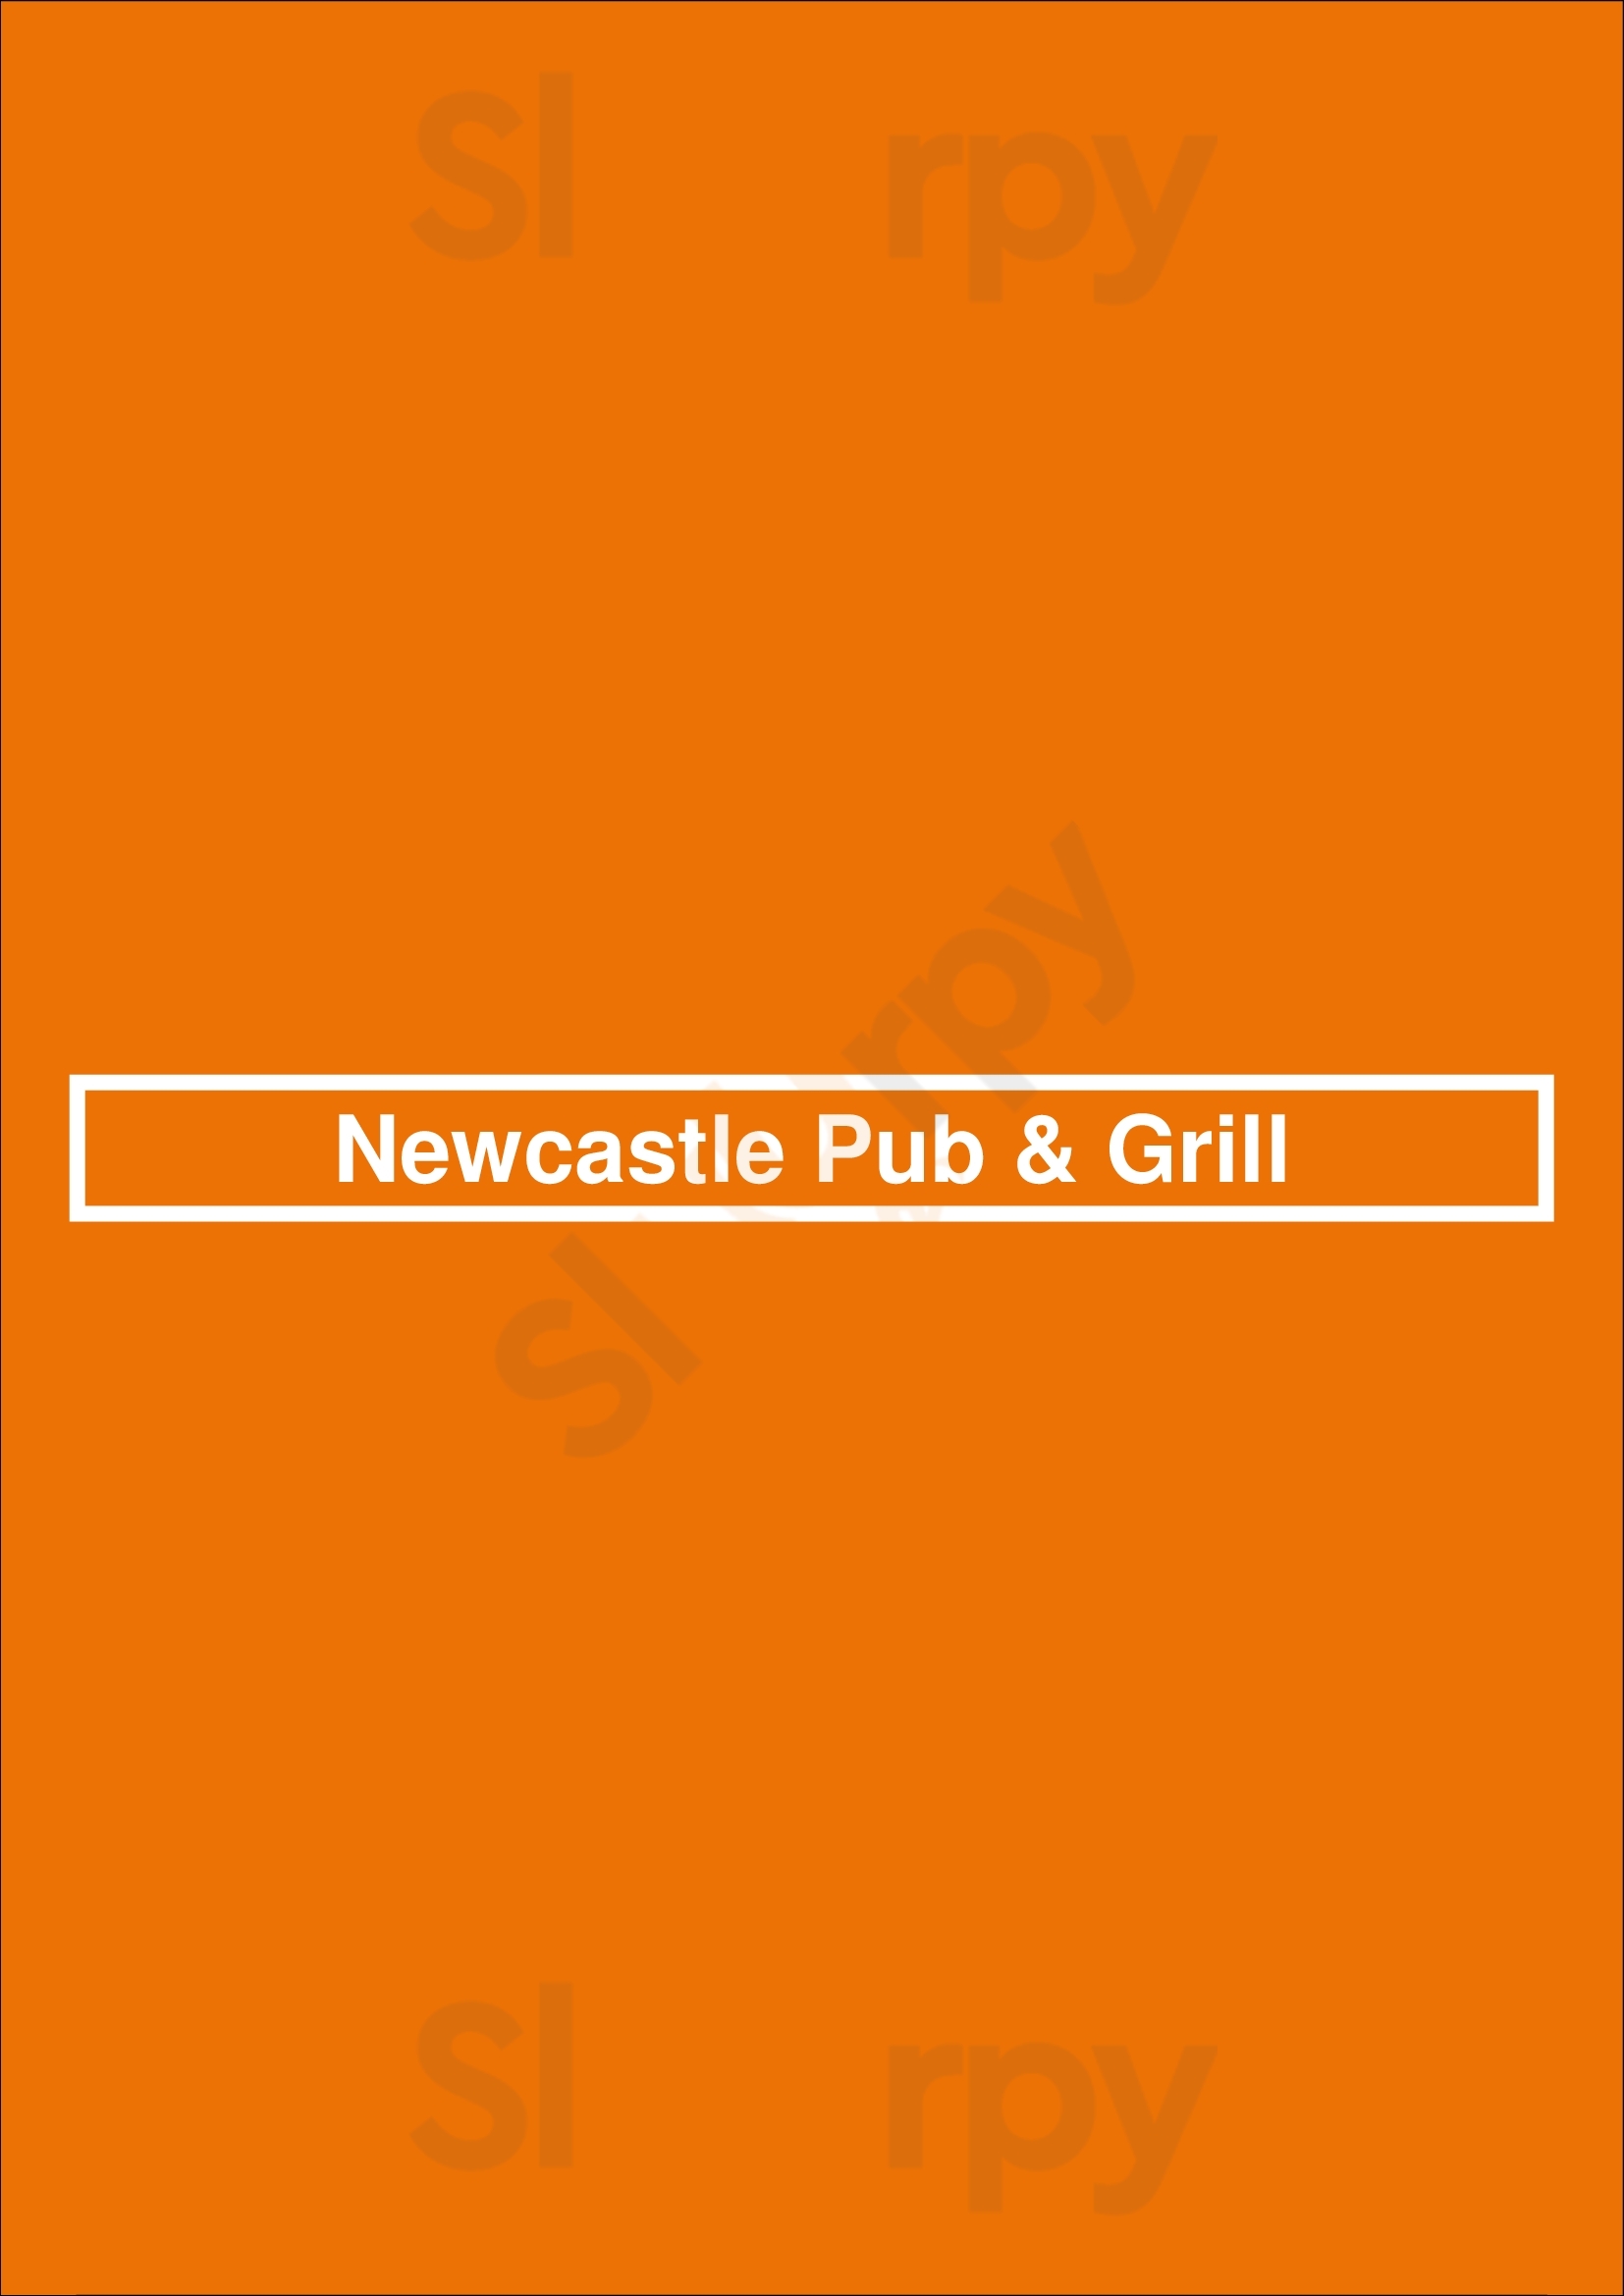 Newcastle Pub & Grill Edmonton Menu - 1